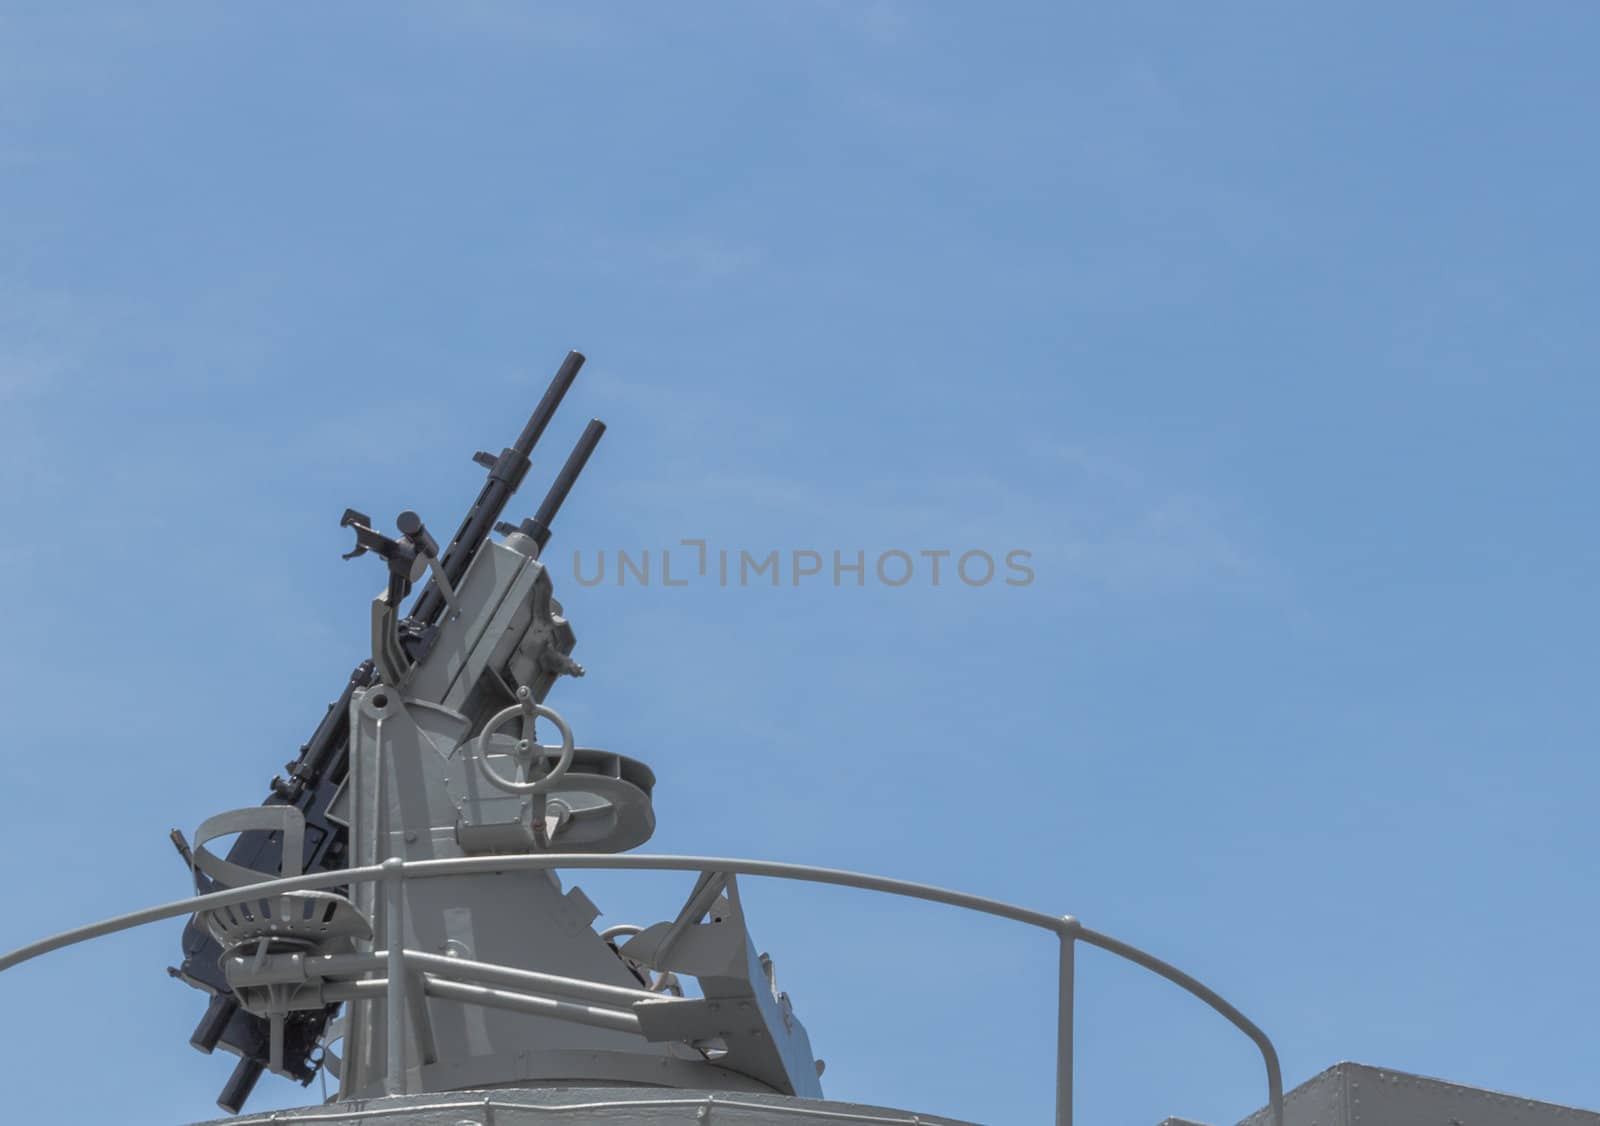 Machine gun on the battleship by punpleng